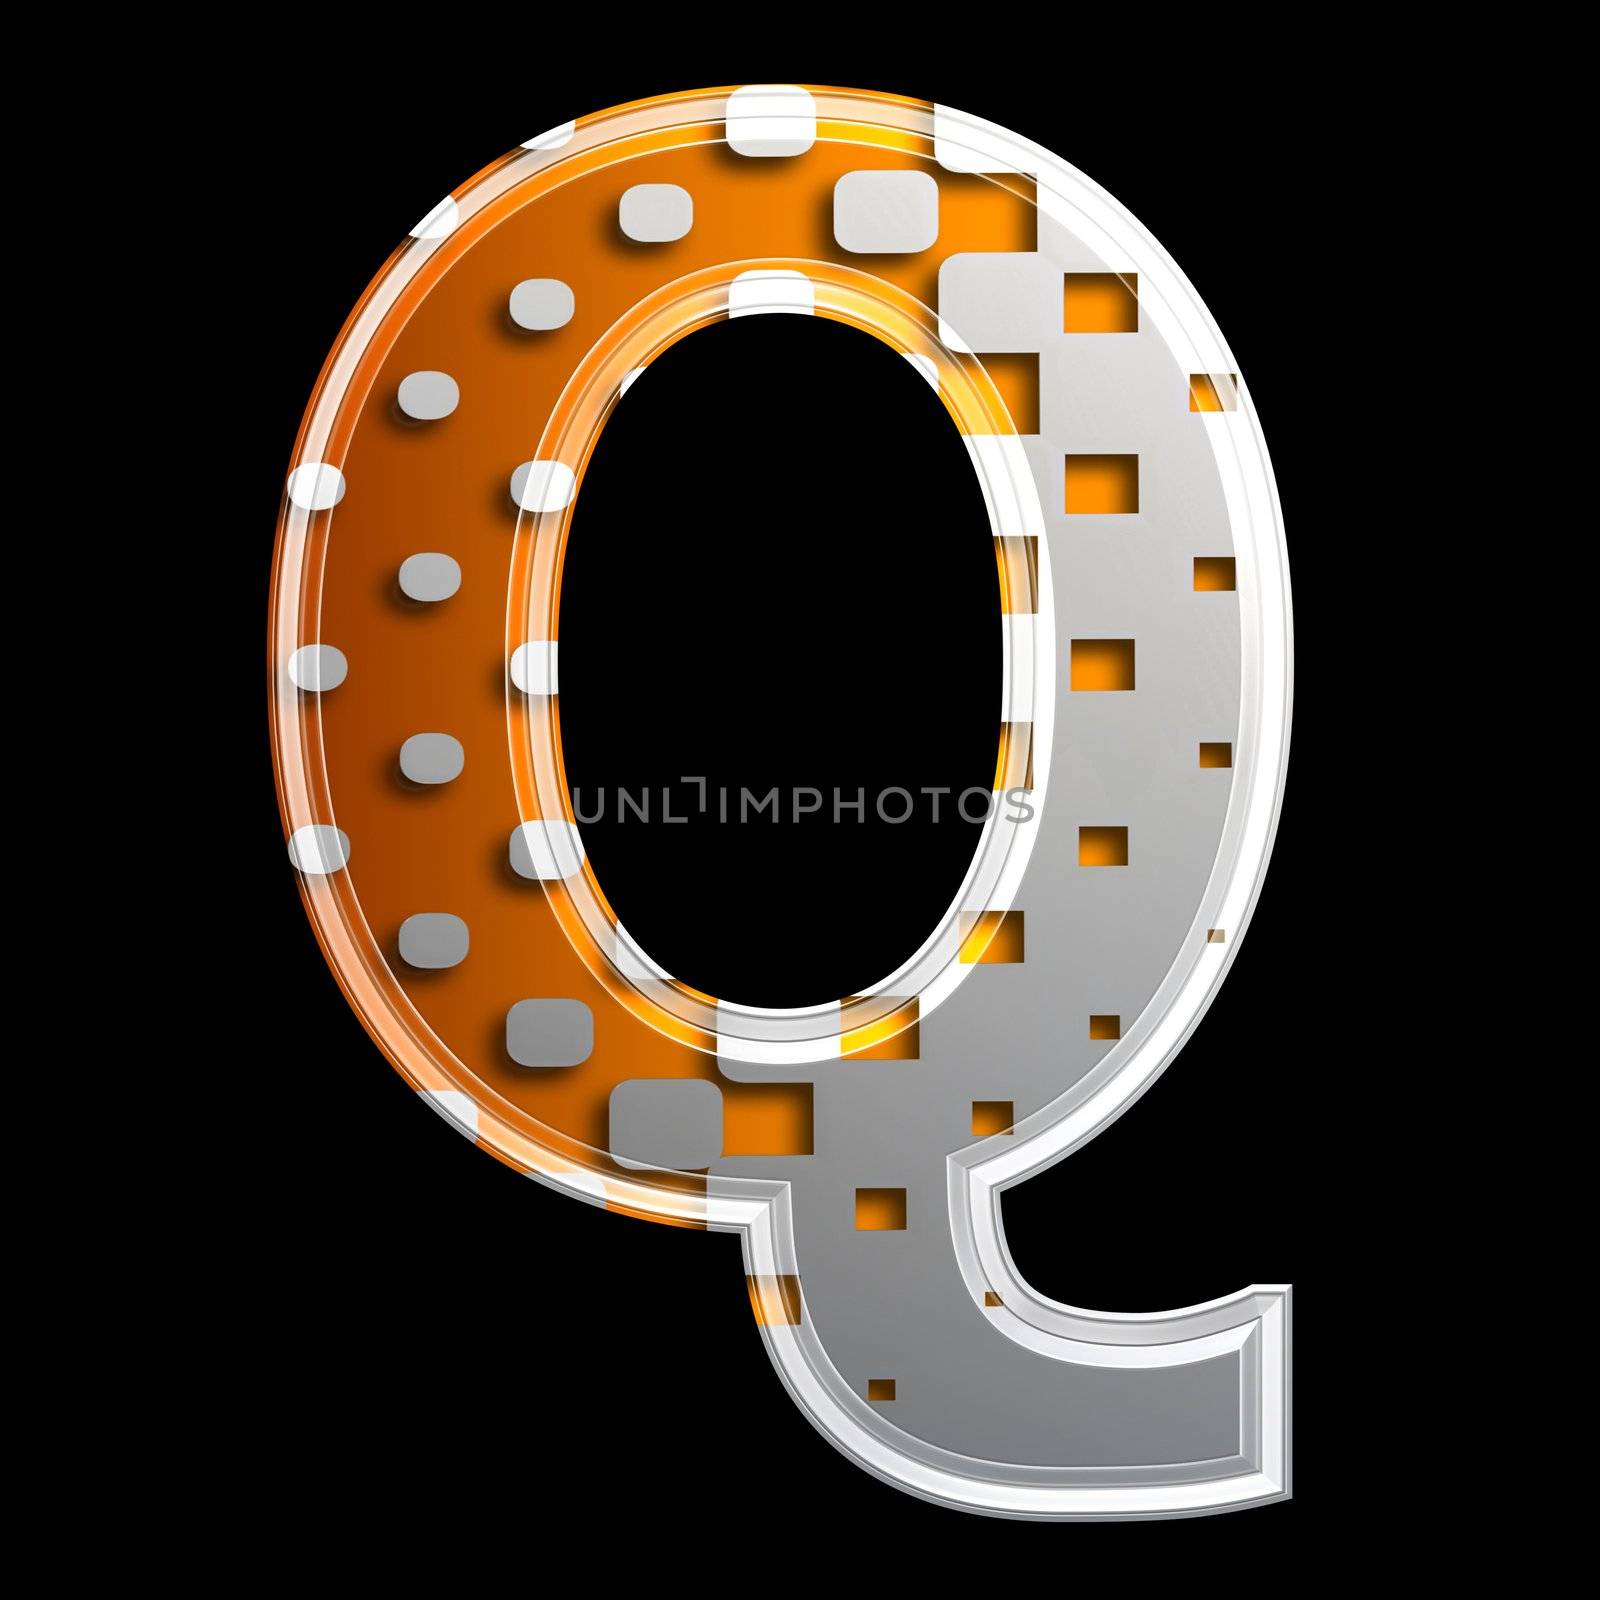 halftone 3d letter - Q by chrisroll